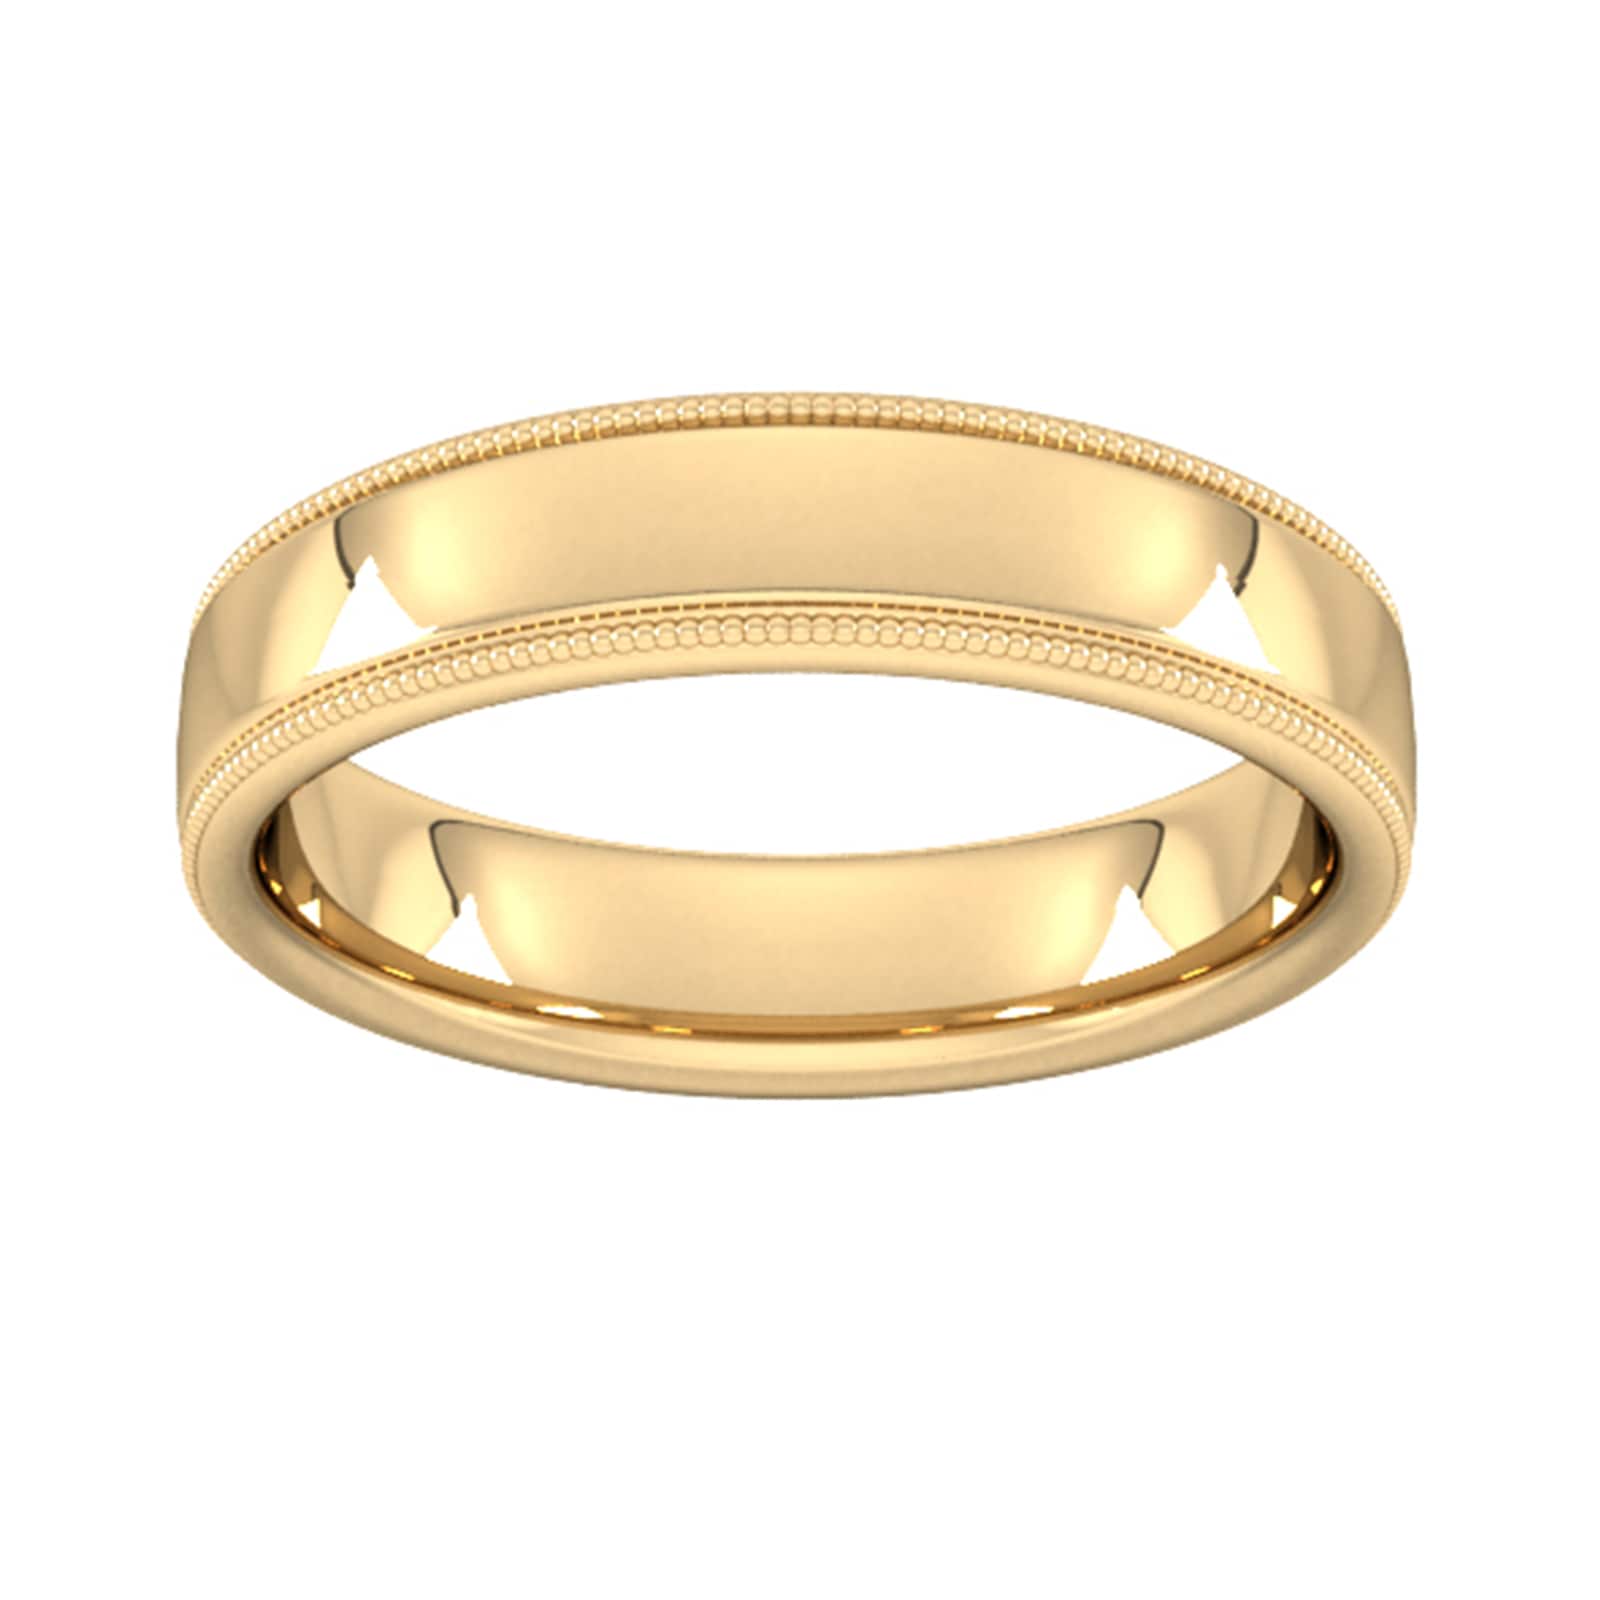 5mm Slight Court Standard Milgrain Edge Wedding Ring In 18 Carat Yellow Gold - Ring Size T